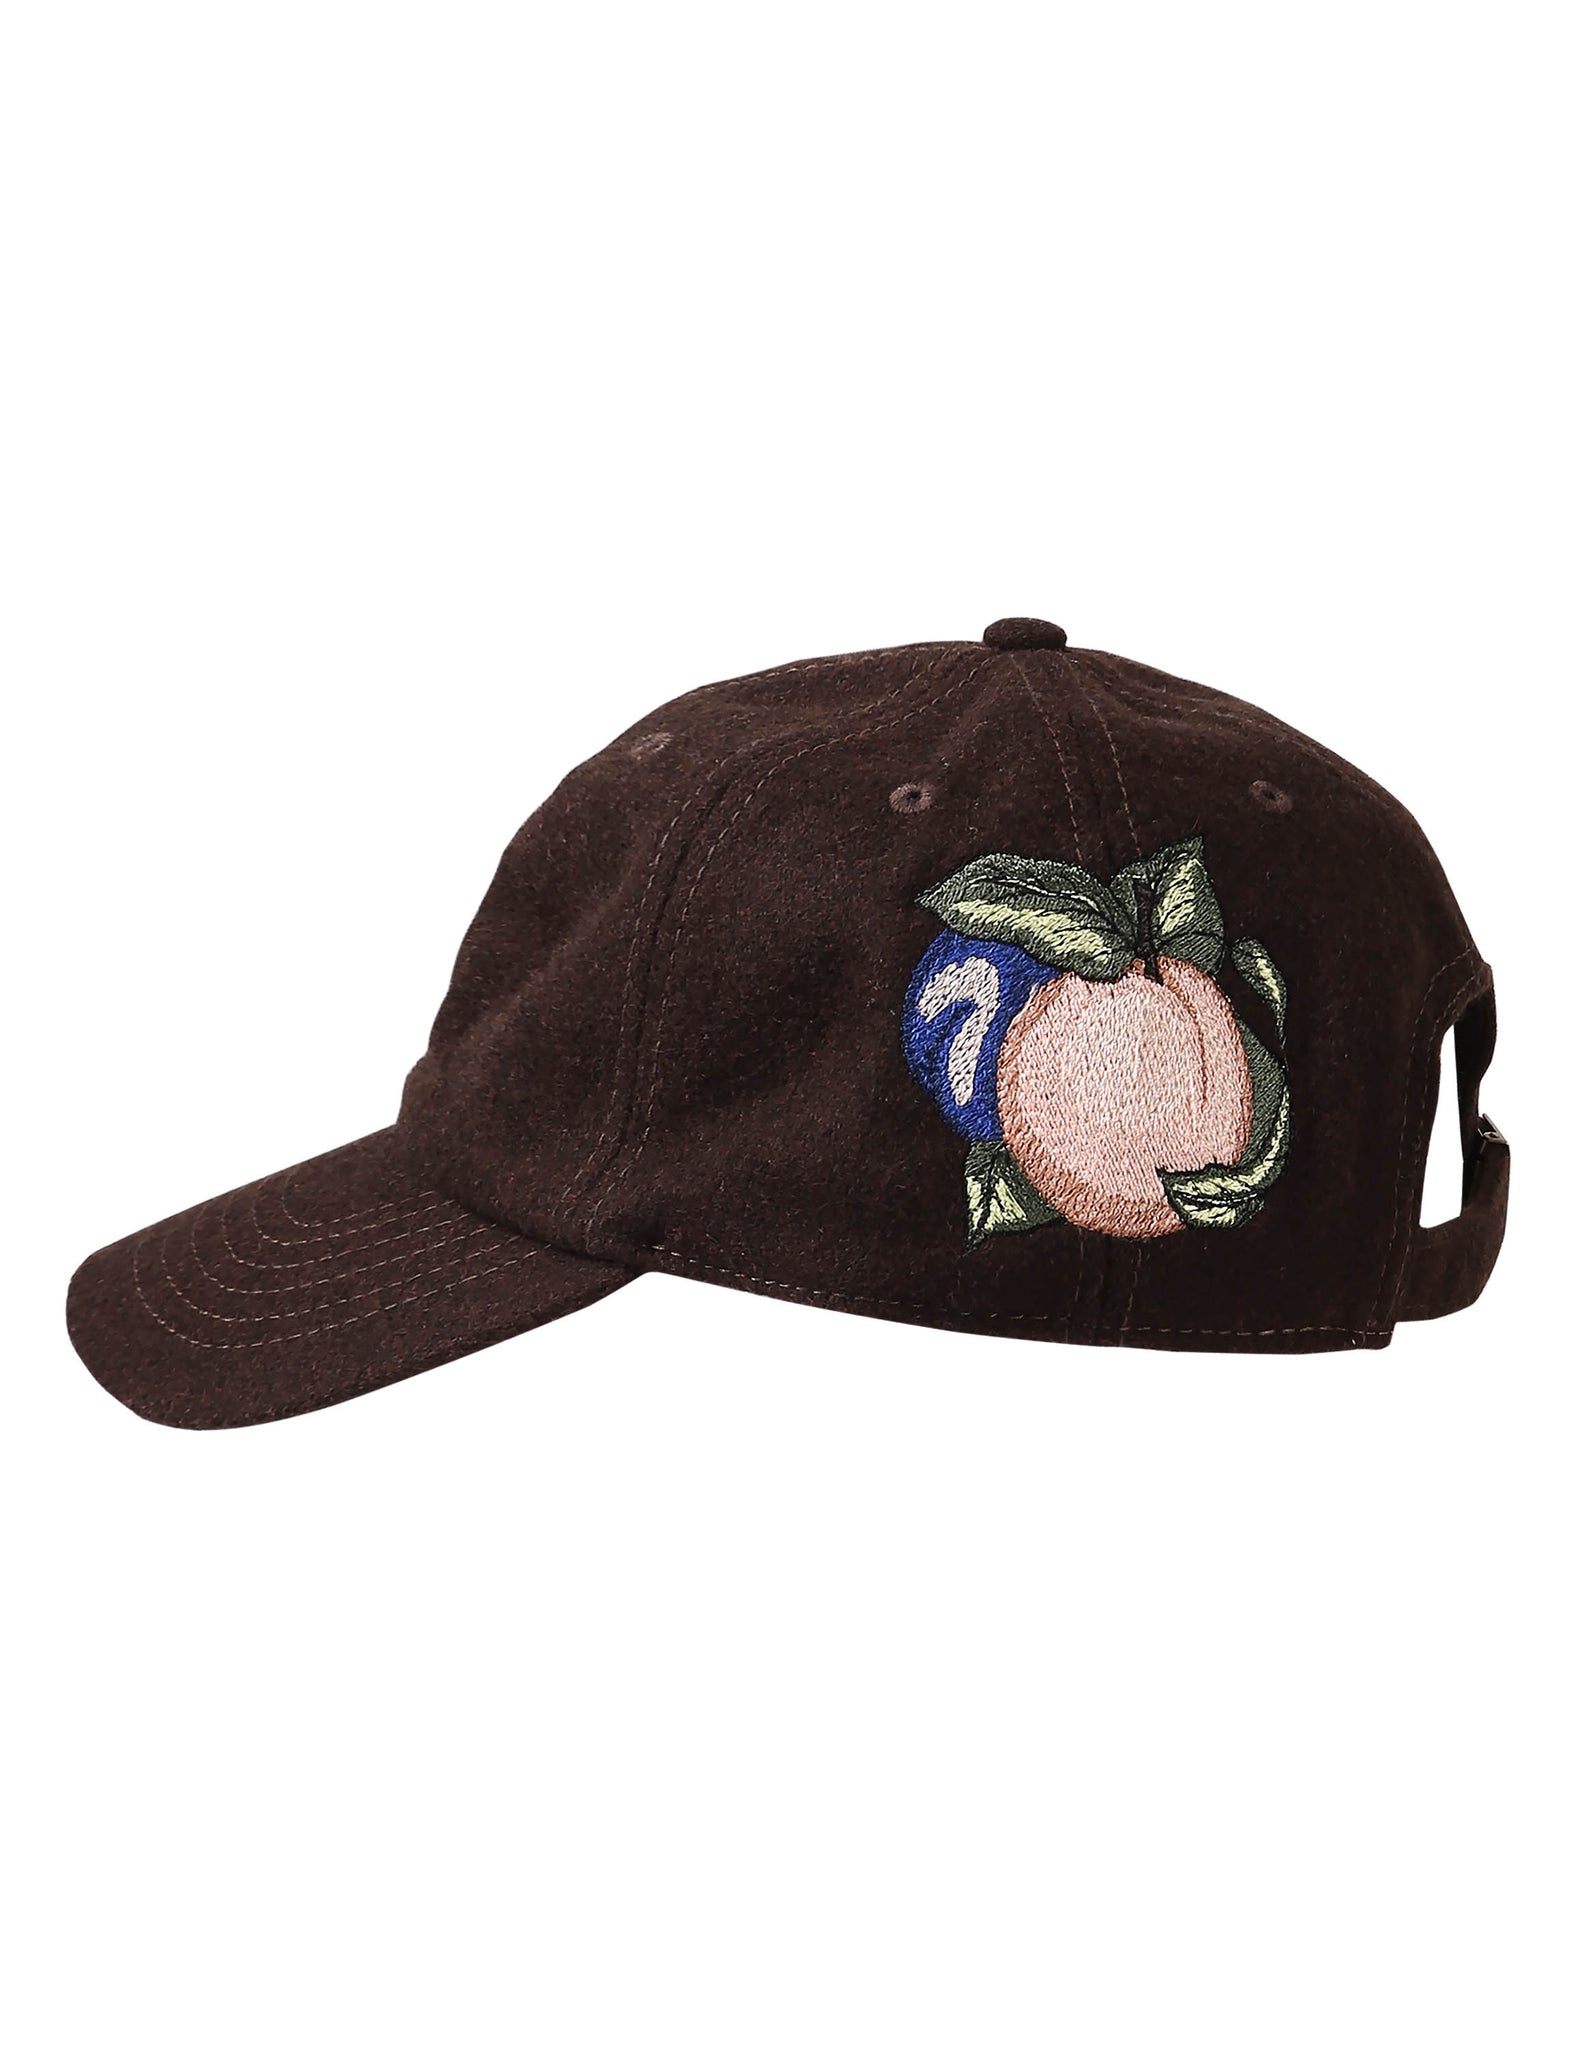 woolen cap_wool cap_woolen cap for men_dad cap_custom dad hats_cool dad hats_cheap dad hats_caps dad_Brown